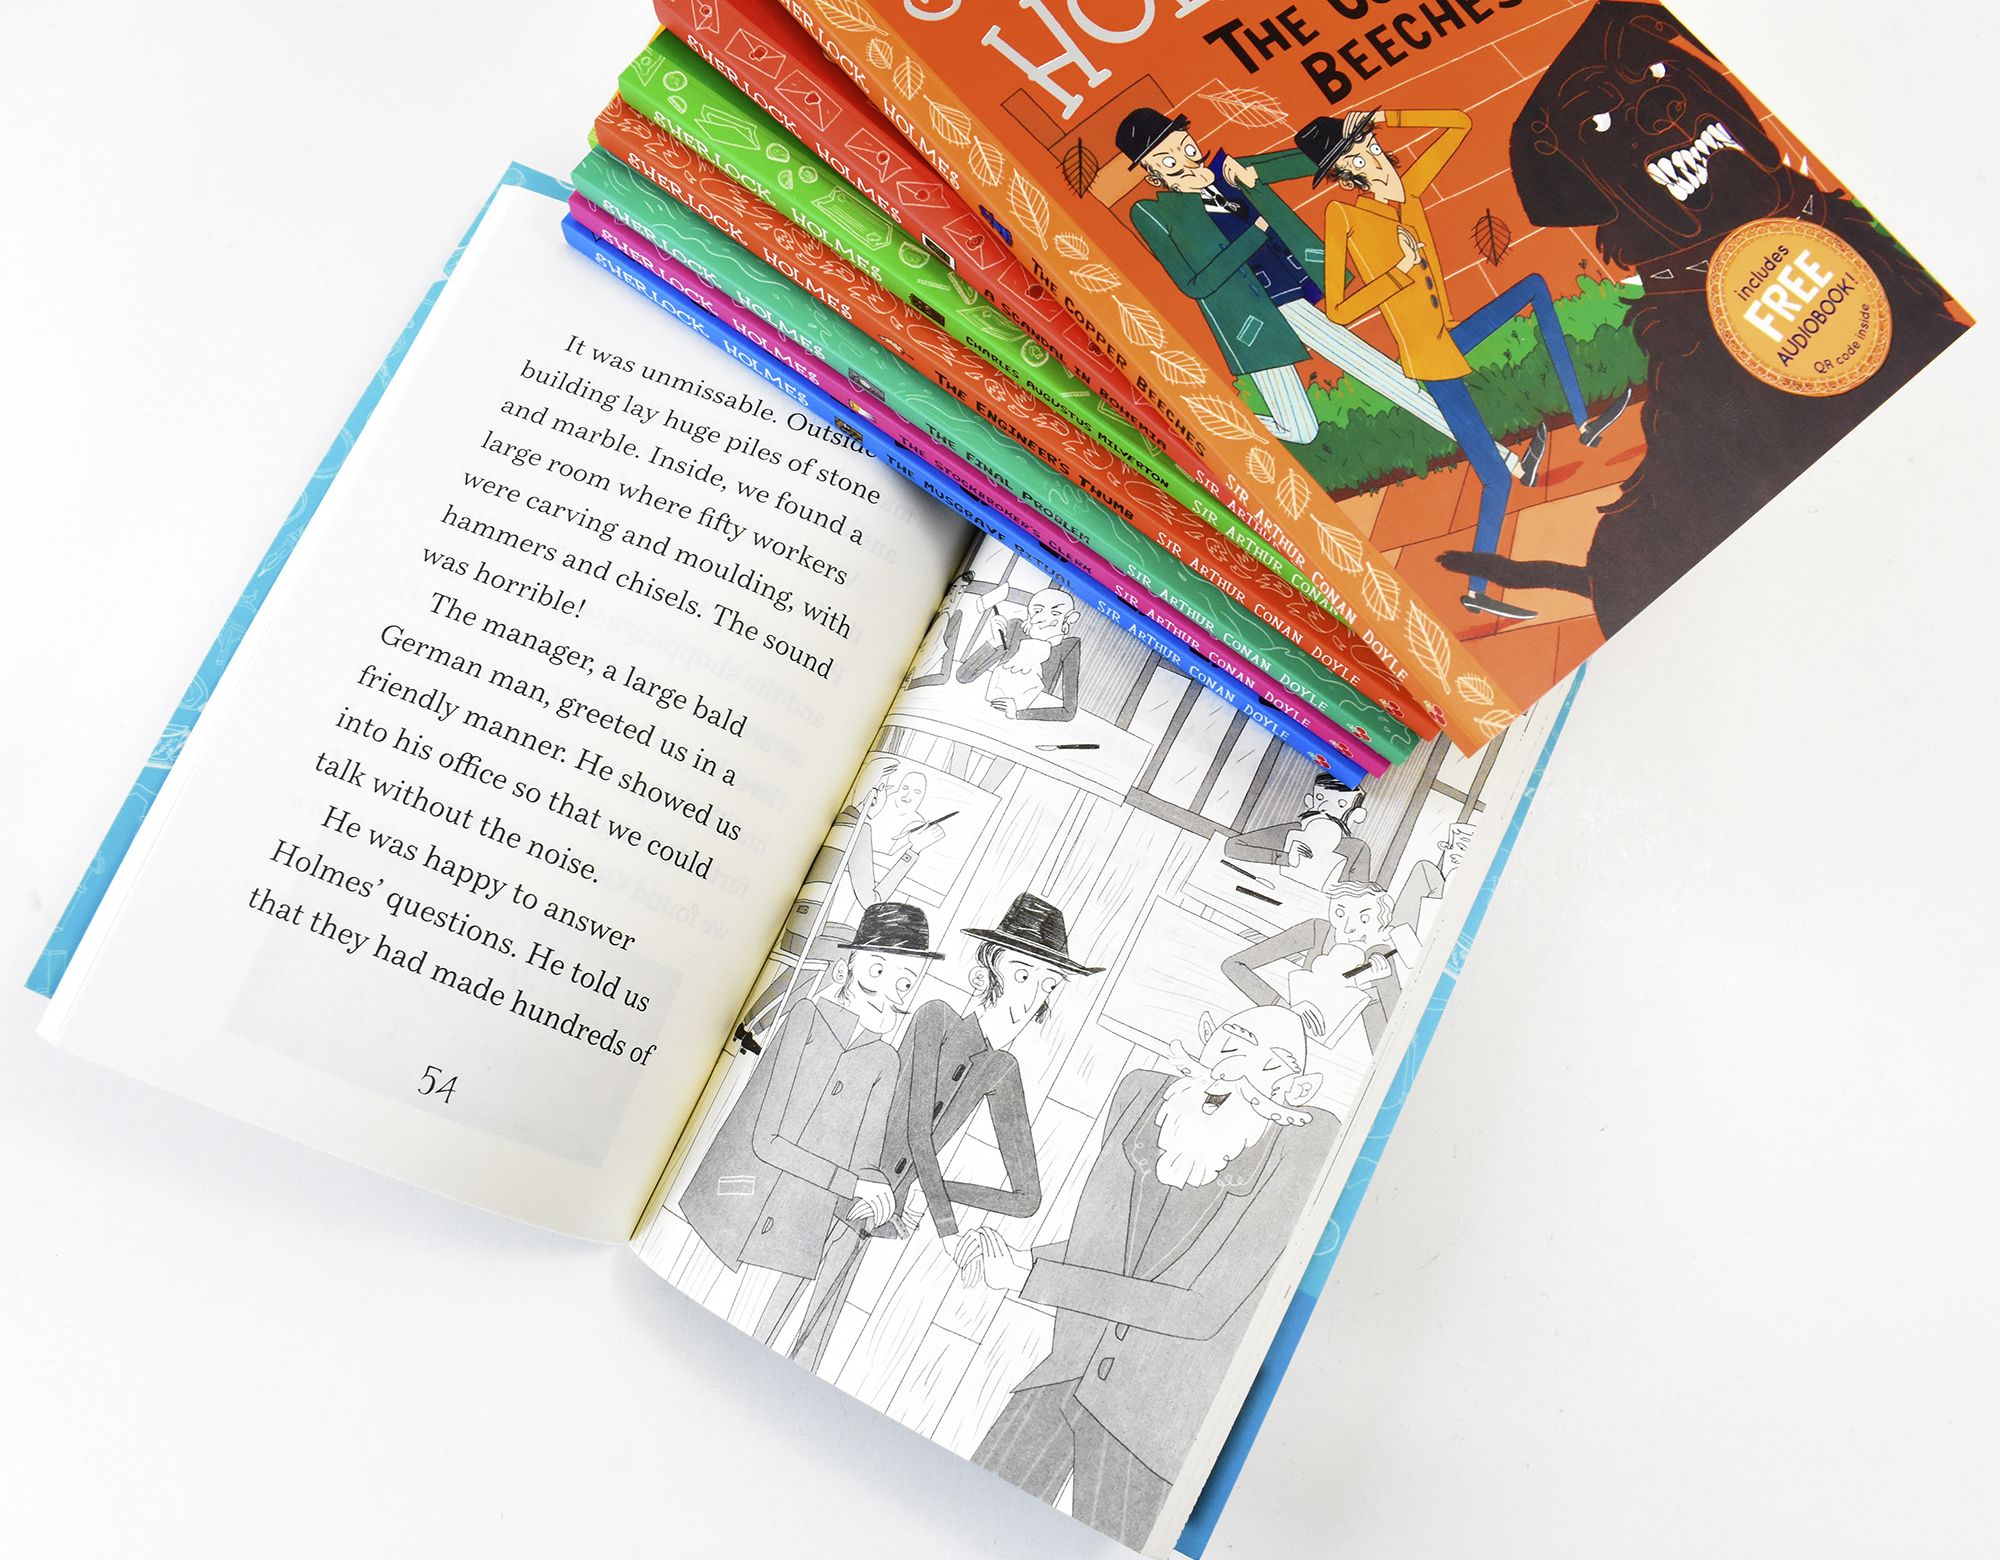 Sherlock Holmes 10 Books Series 2 Children Collection Paperback Box Set By Sir Arthur Conan Doyle - St Stephens Books